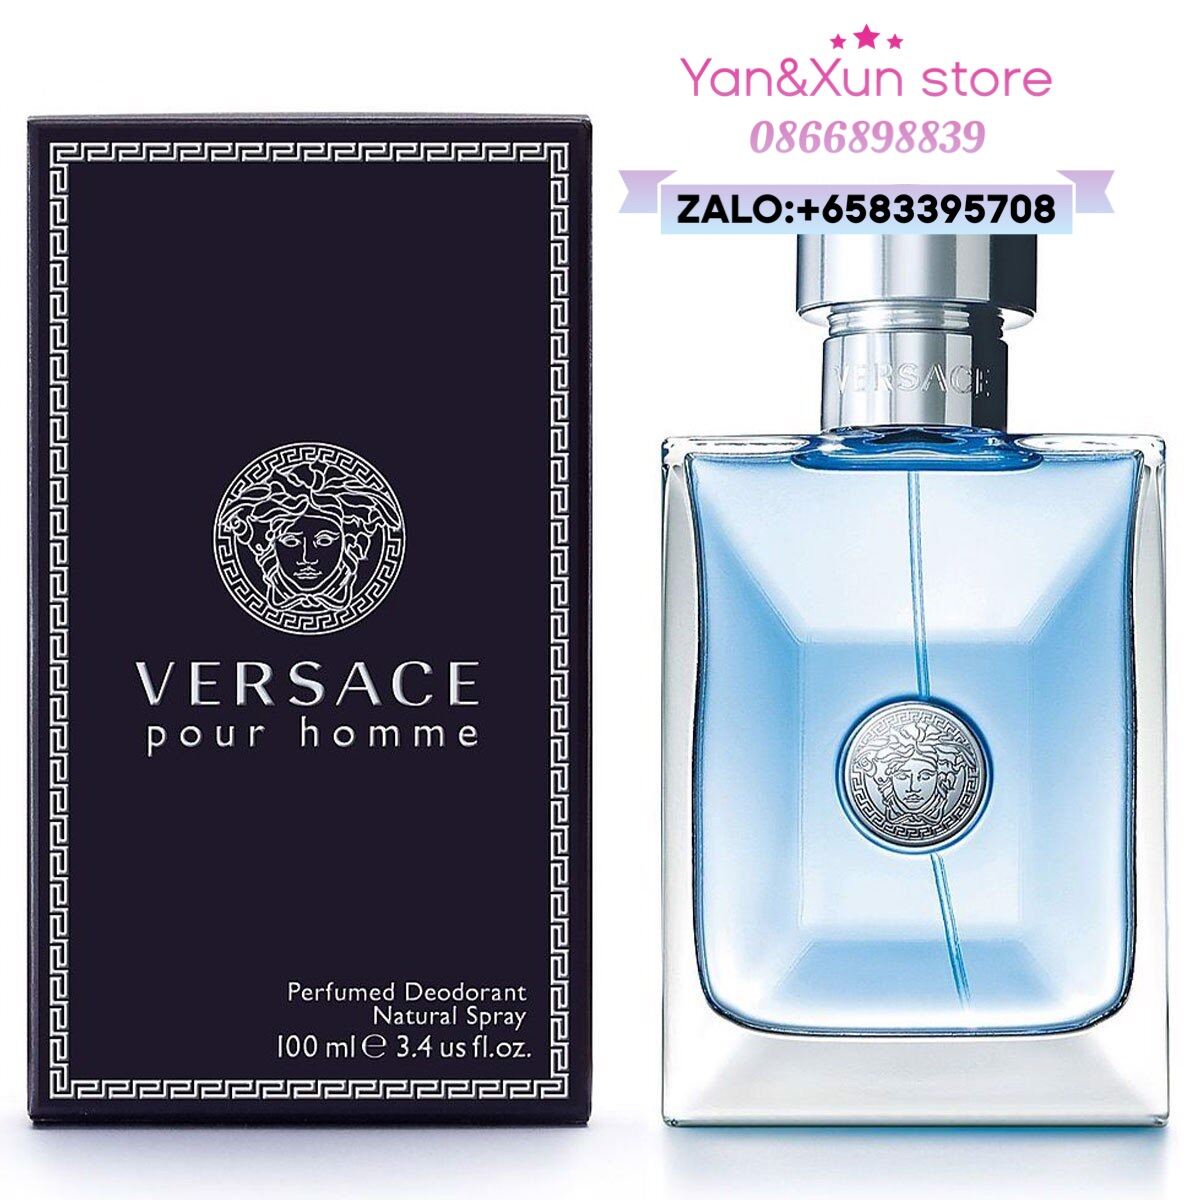 Nước hoa Nam Versace Pour Home 100ml Của Ý  mua tại Store Singapore